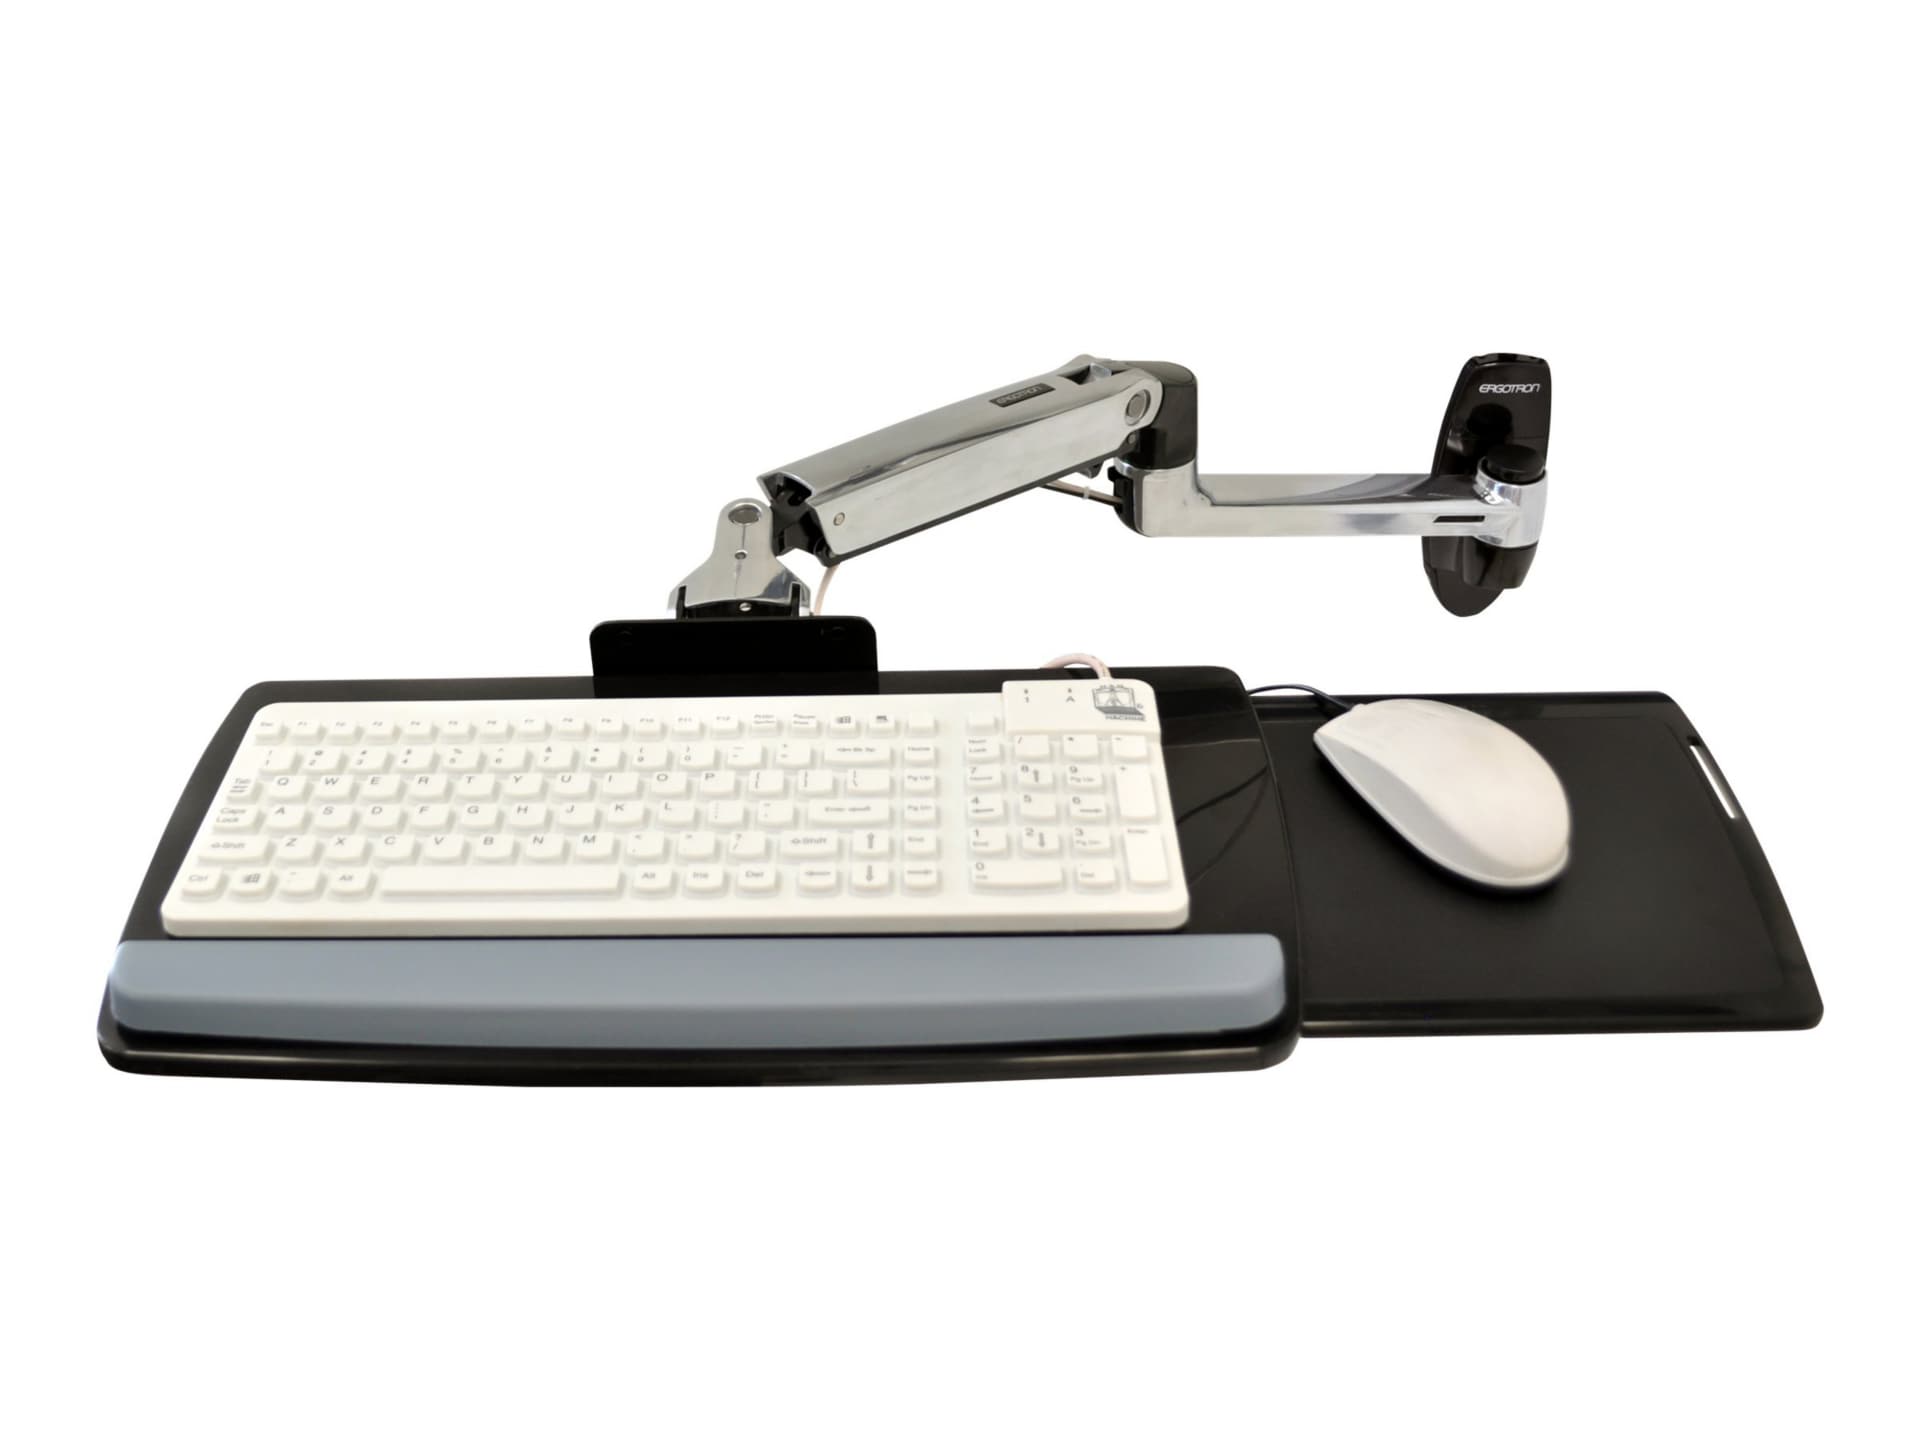 Ergotron LX keyboard/mouse arm mount tray